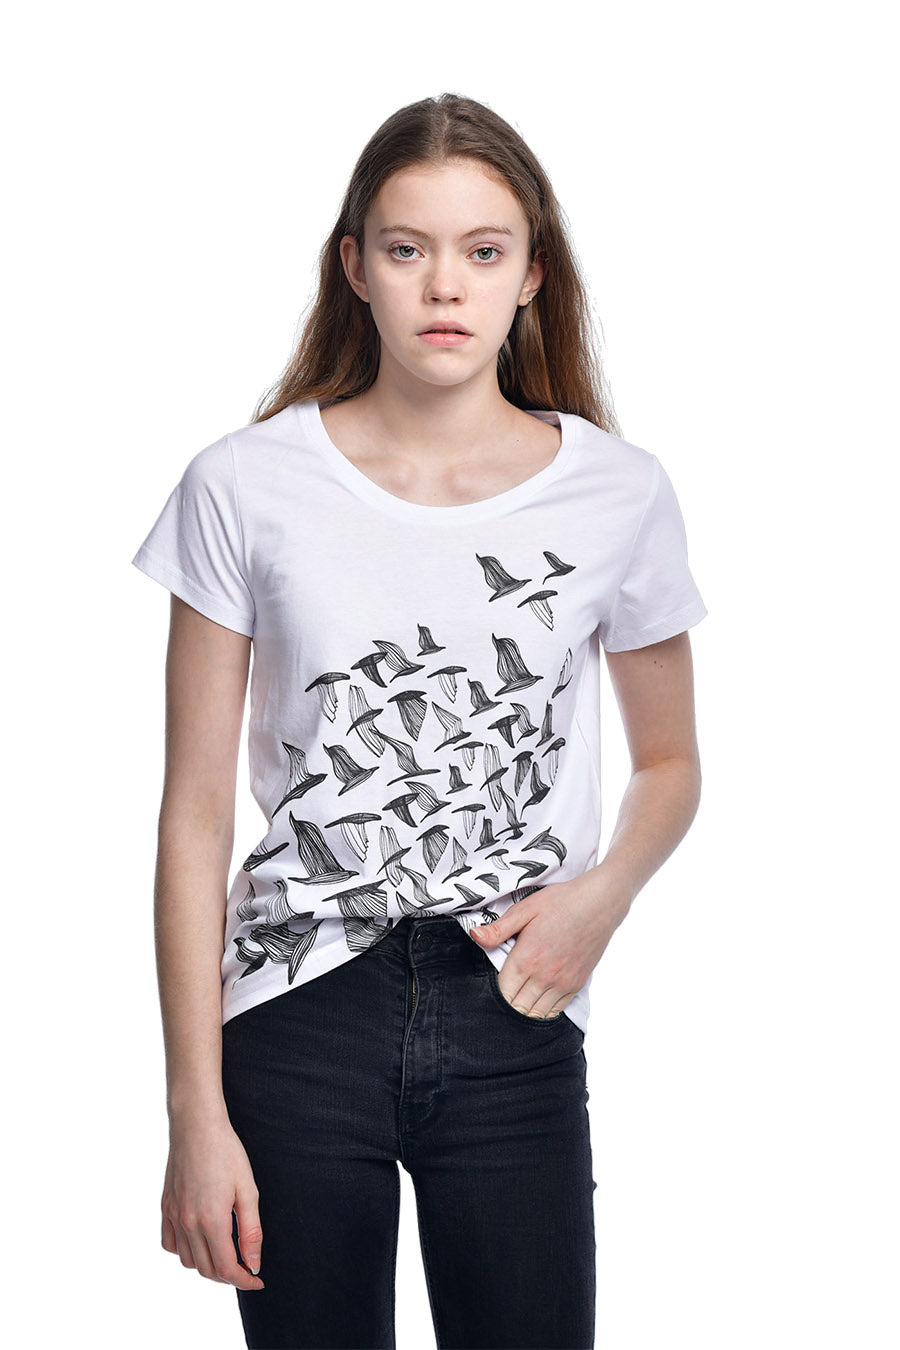 Lilit-Sarkisian-Birds-White-T-shirt